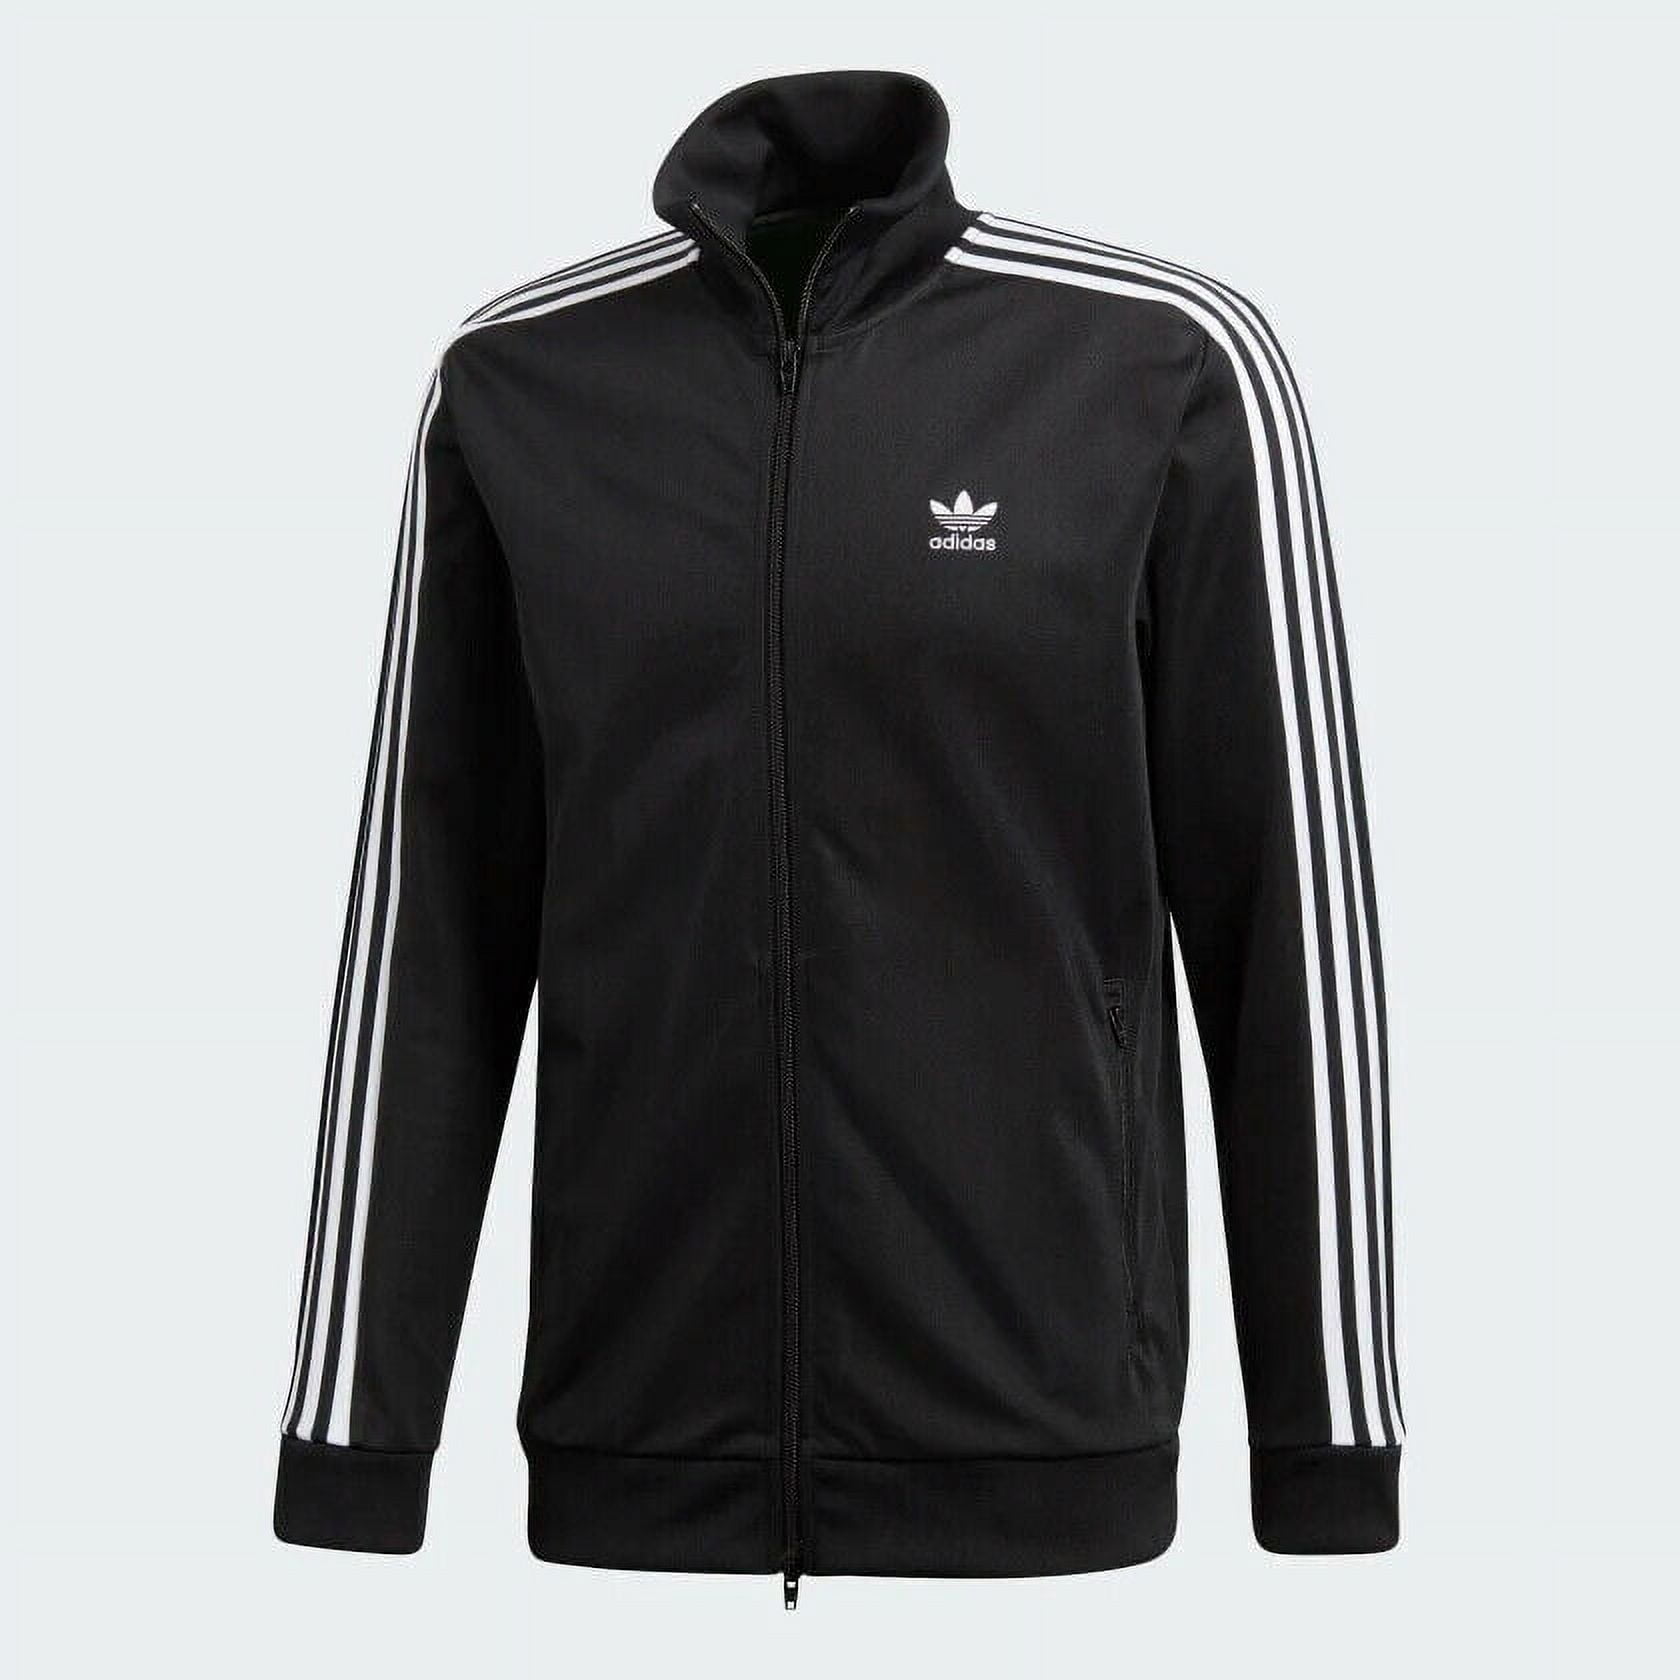 Adidas Originals Men's Beckenbauer Track Jacket Black CW1250